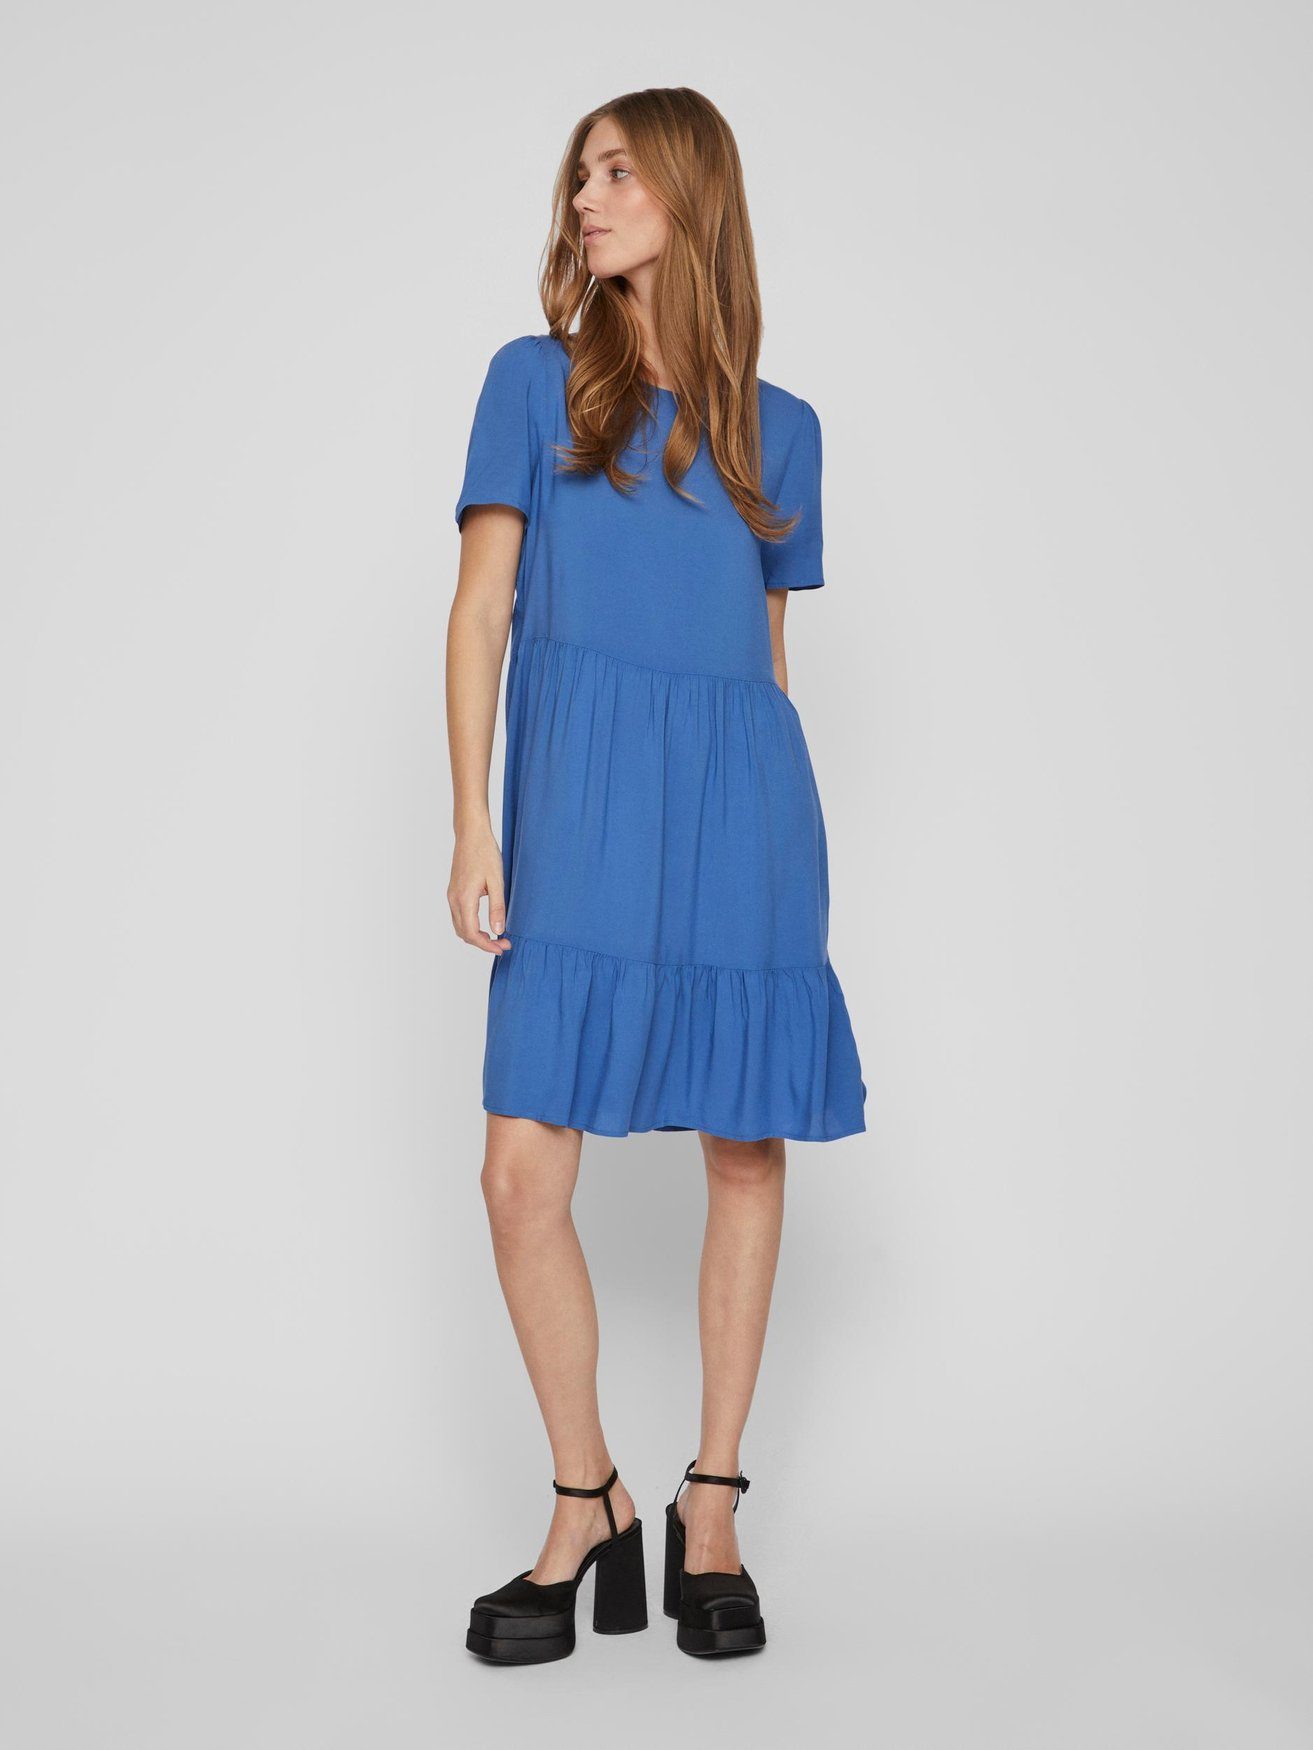 Shirtkleid Kleid (kurz) Blusen Blau 6067 Kurzarm Vila Knielanges Dress in VIPAYA